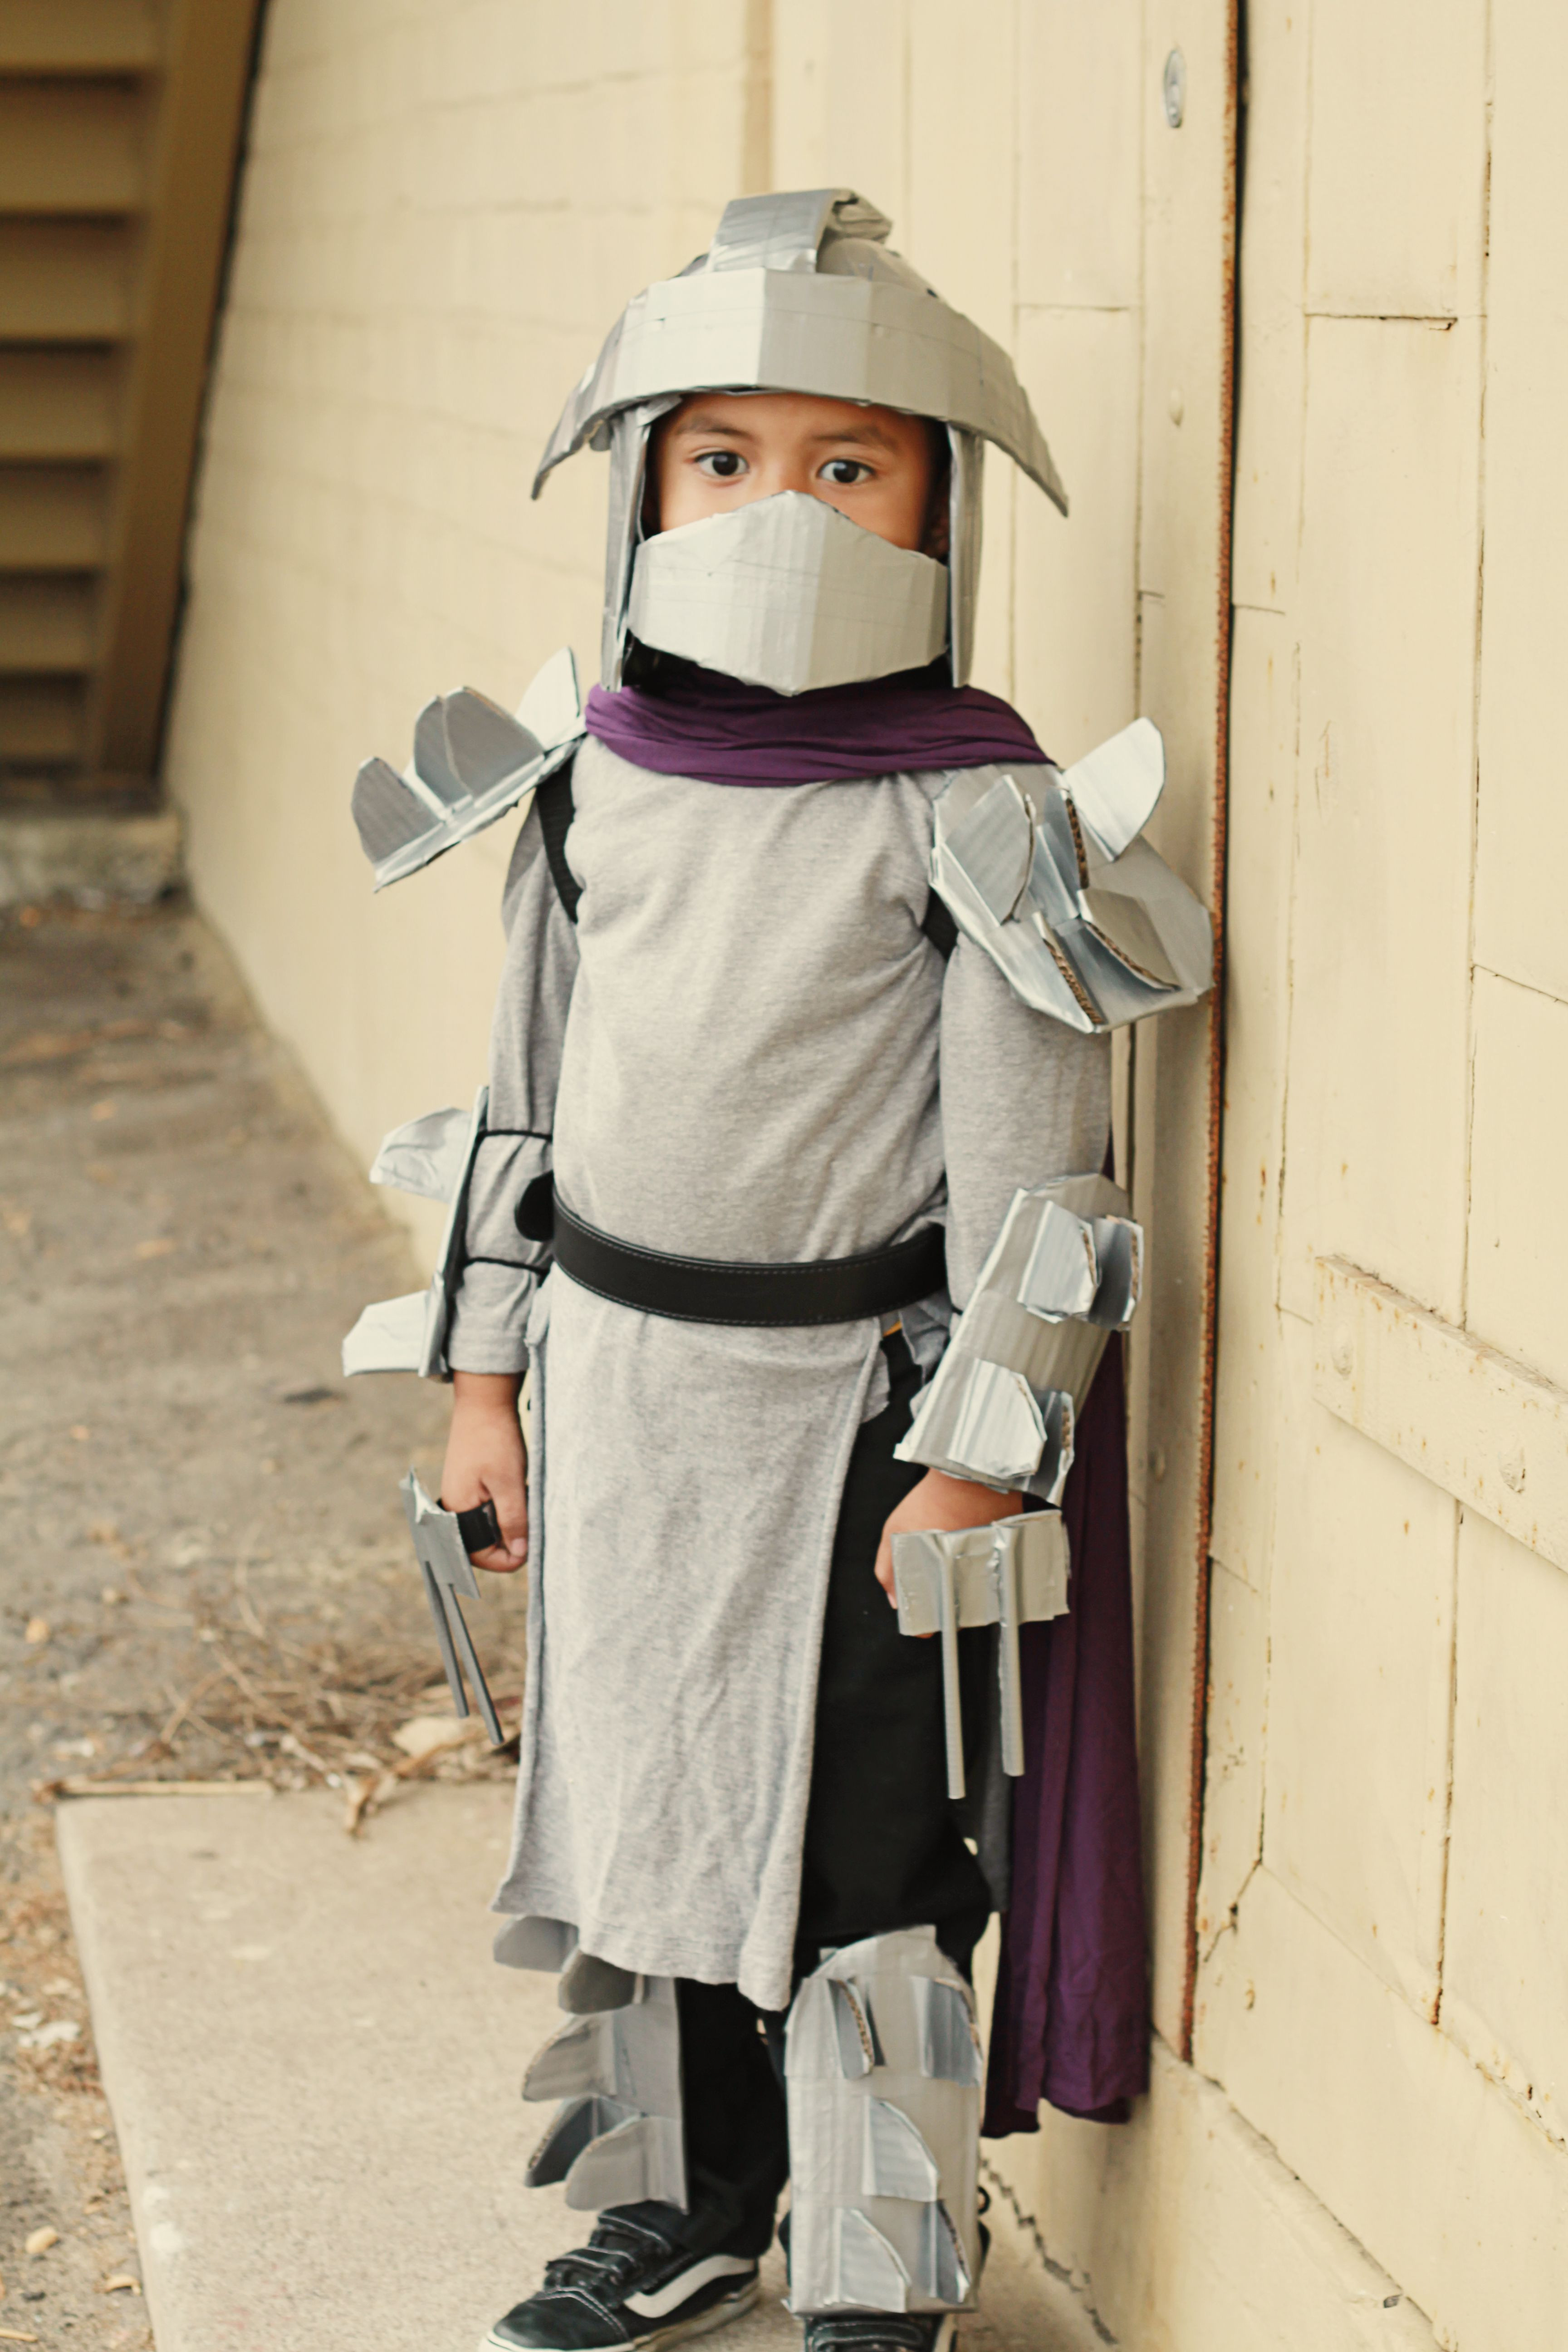 Best ideas about DIY Shredder Costume
. Save or Pin DIY TMNT Shredder Under $10 TMNT Now.